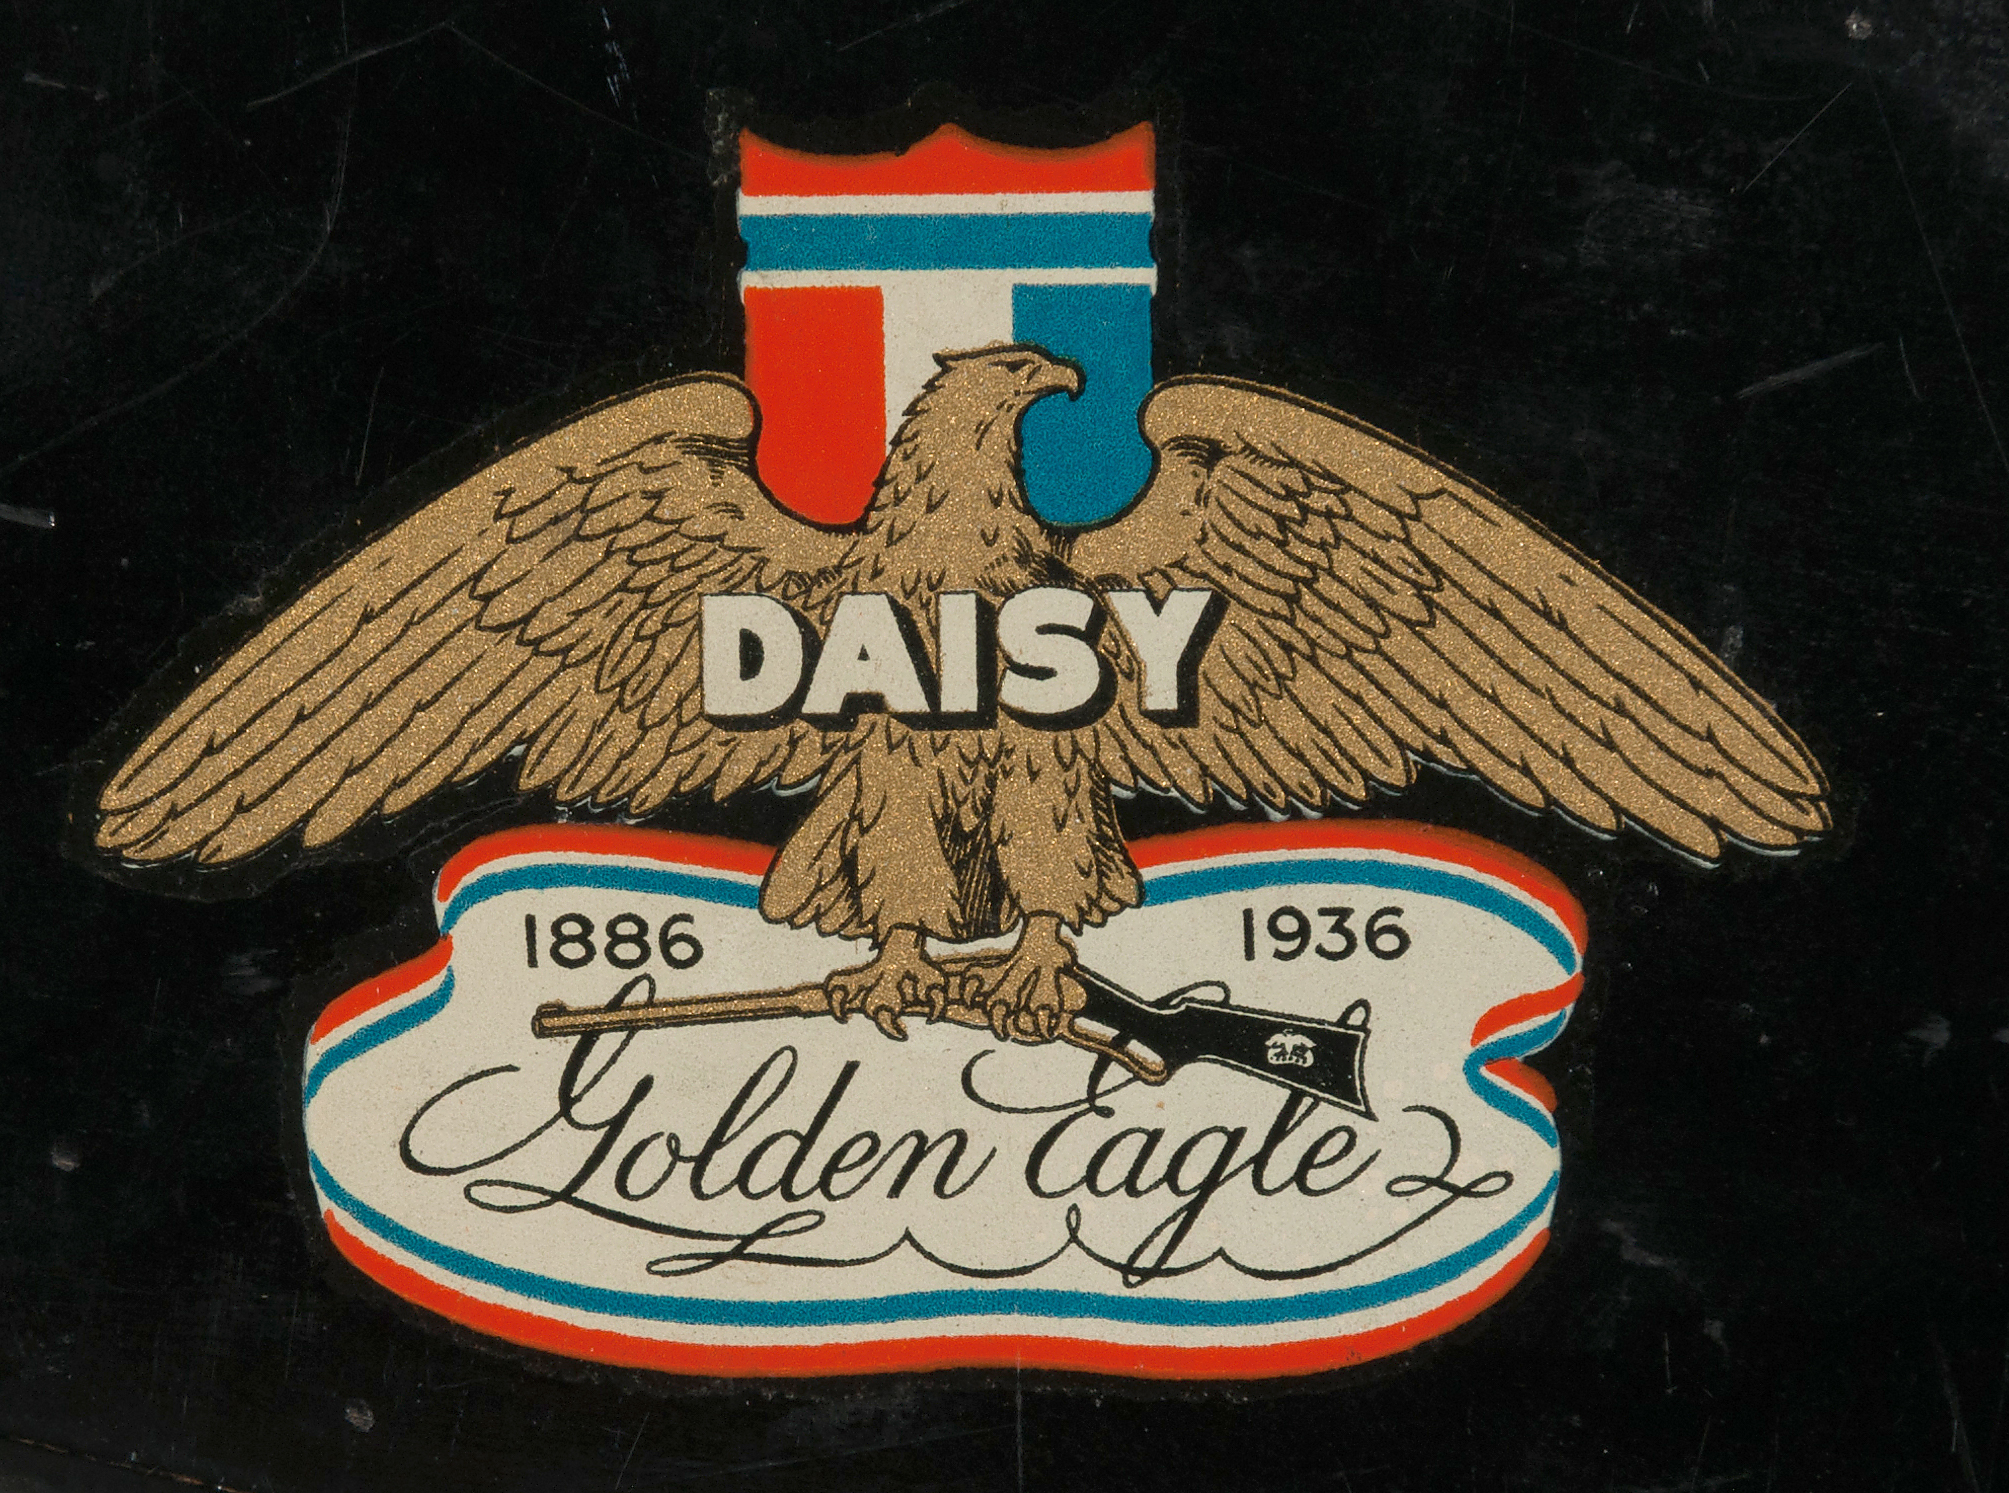 Hake S Daisy Golden Eagle Rifle